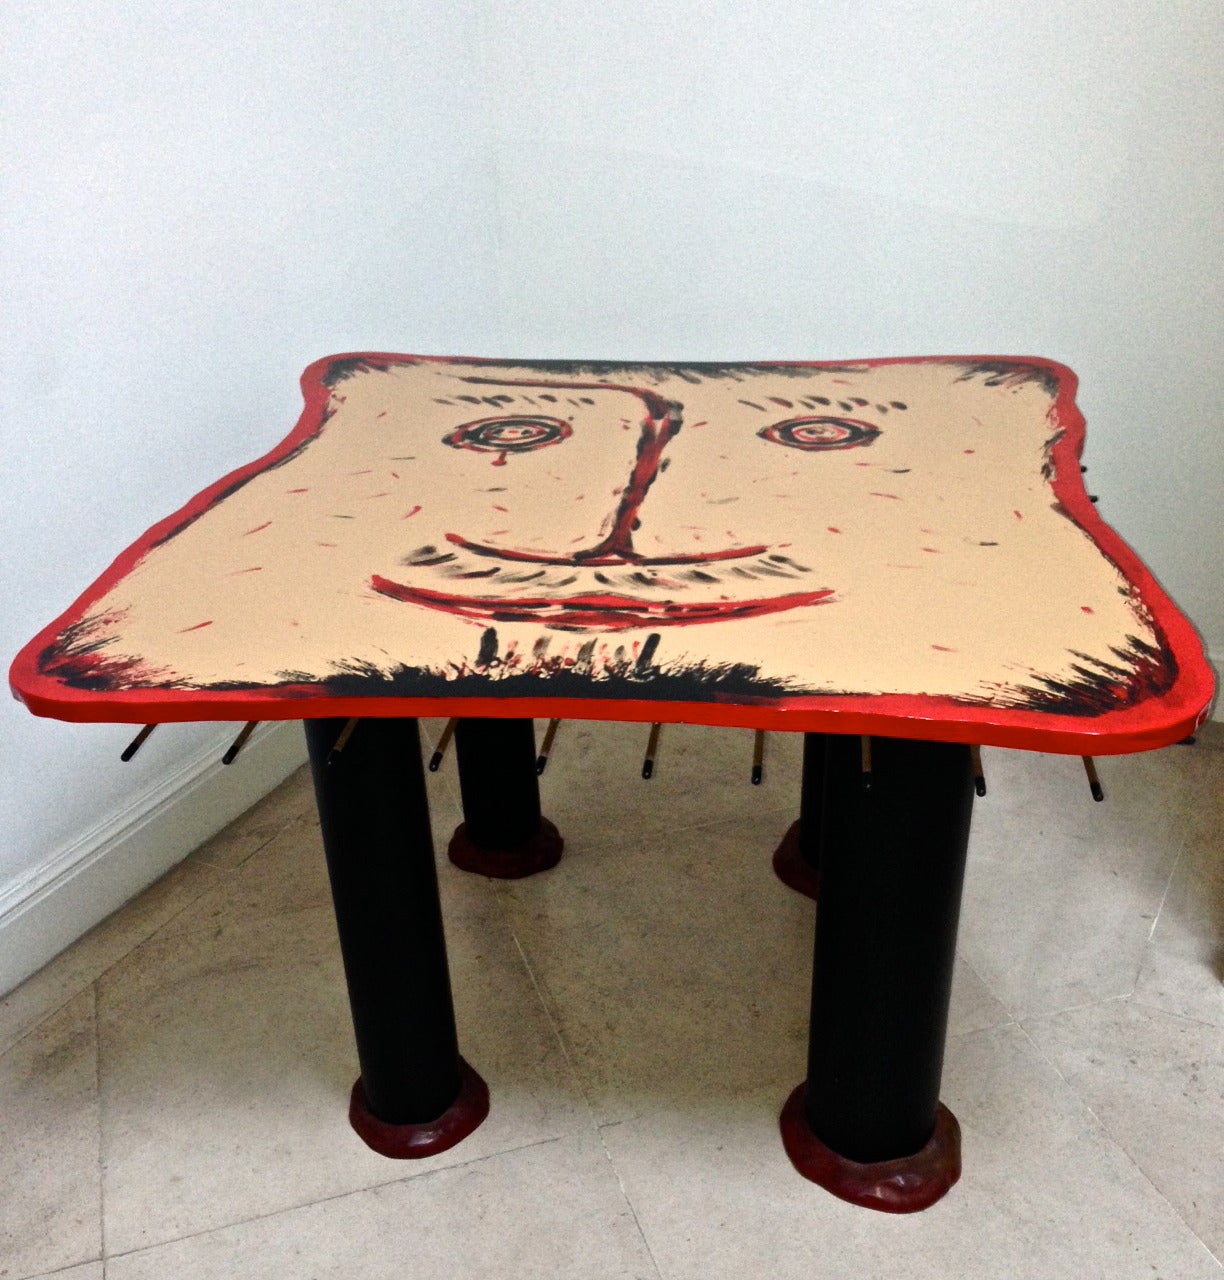 Table by Gaetano Pesce "Sansone Due"